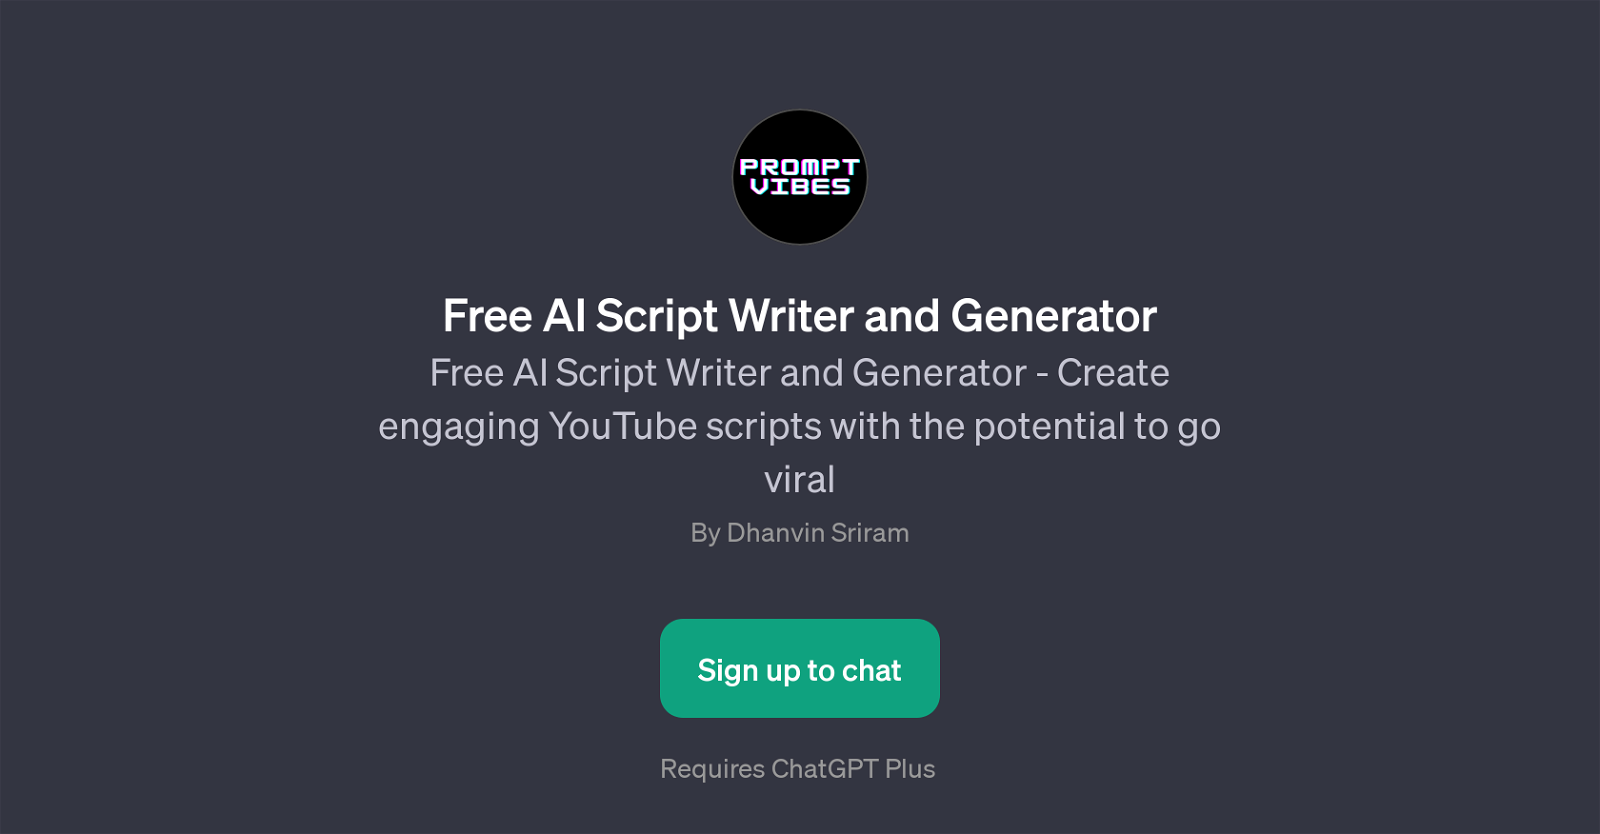 Free AI Script Writer and Generator website